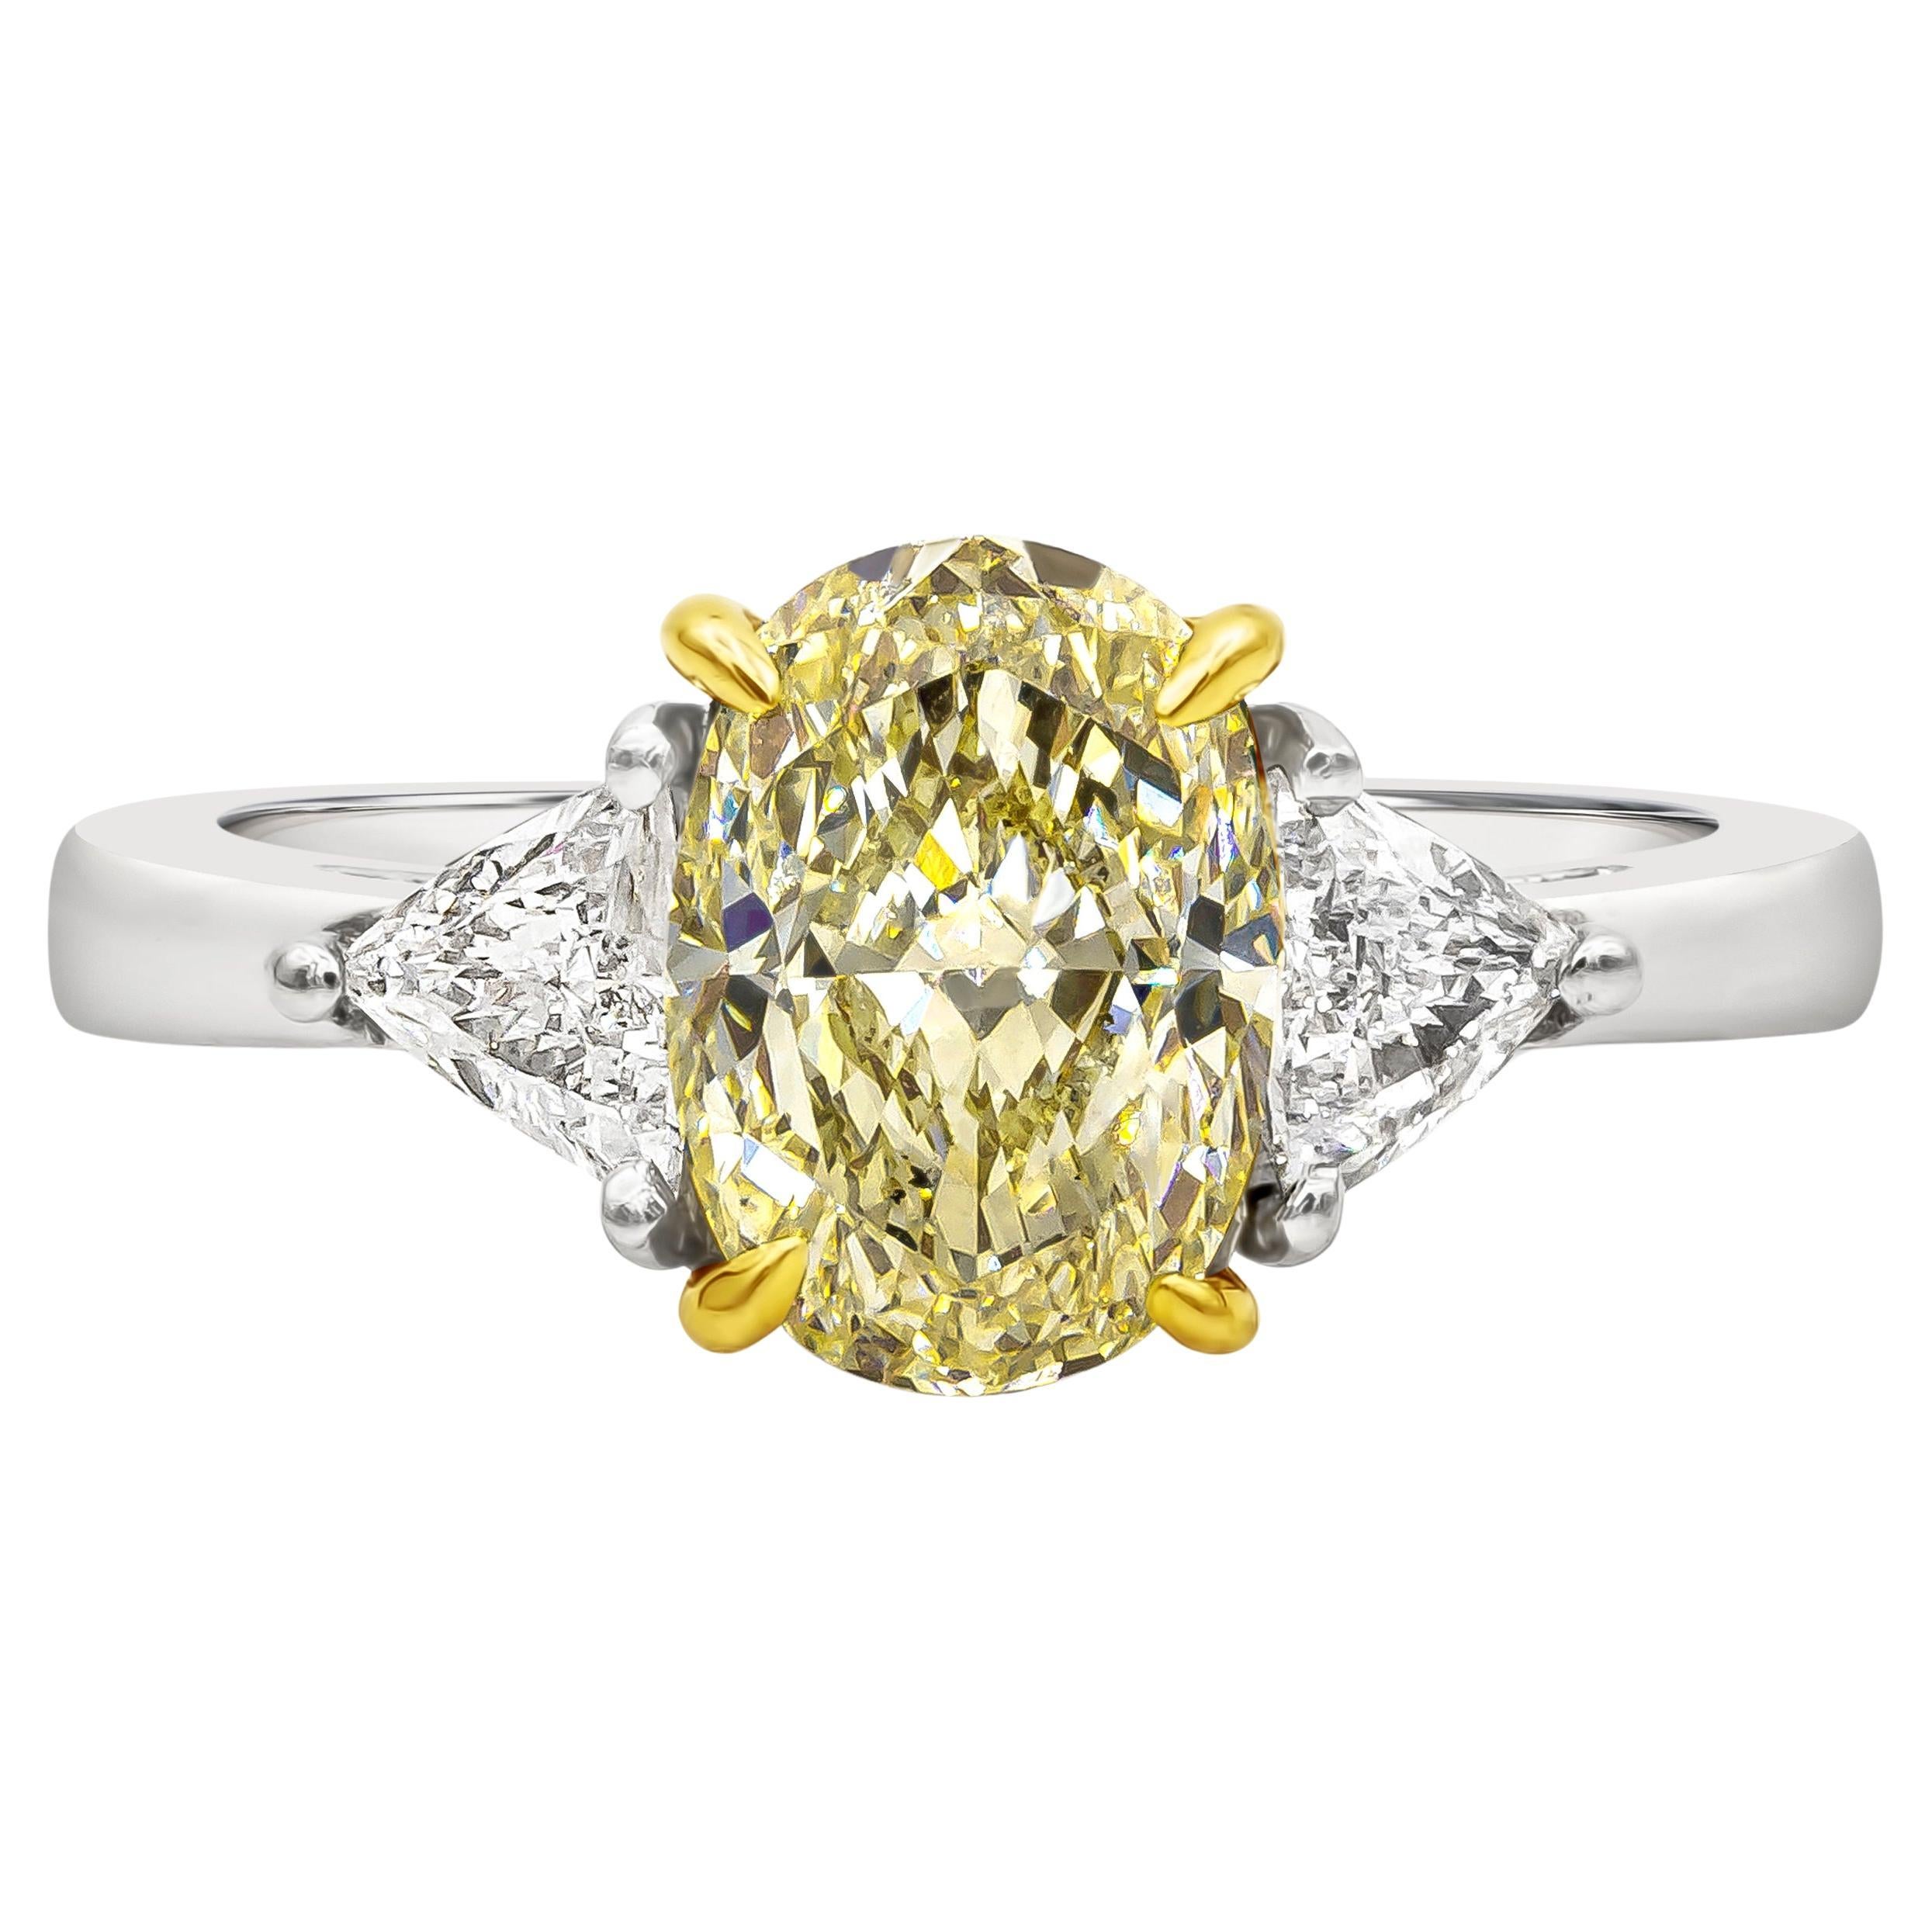 GIA Certified 1.87 Carat Oval Yellow Diamond Three-Stone Engagement Ring